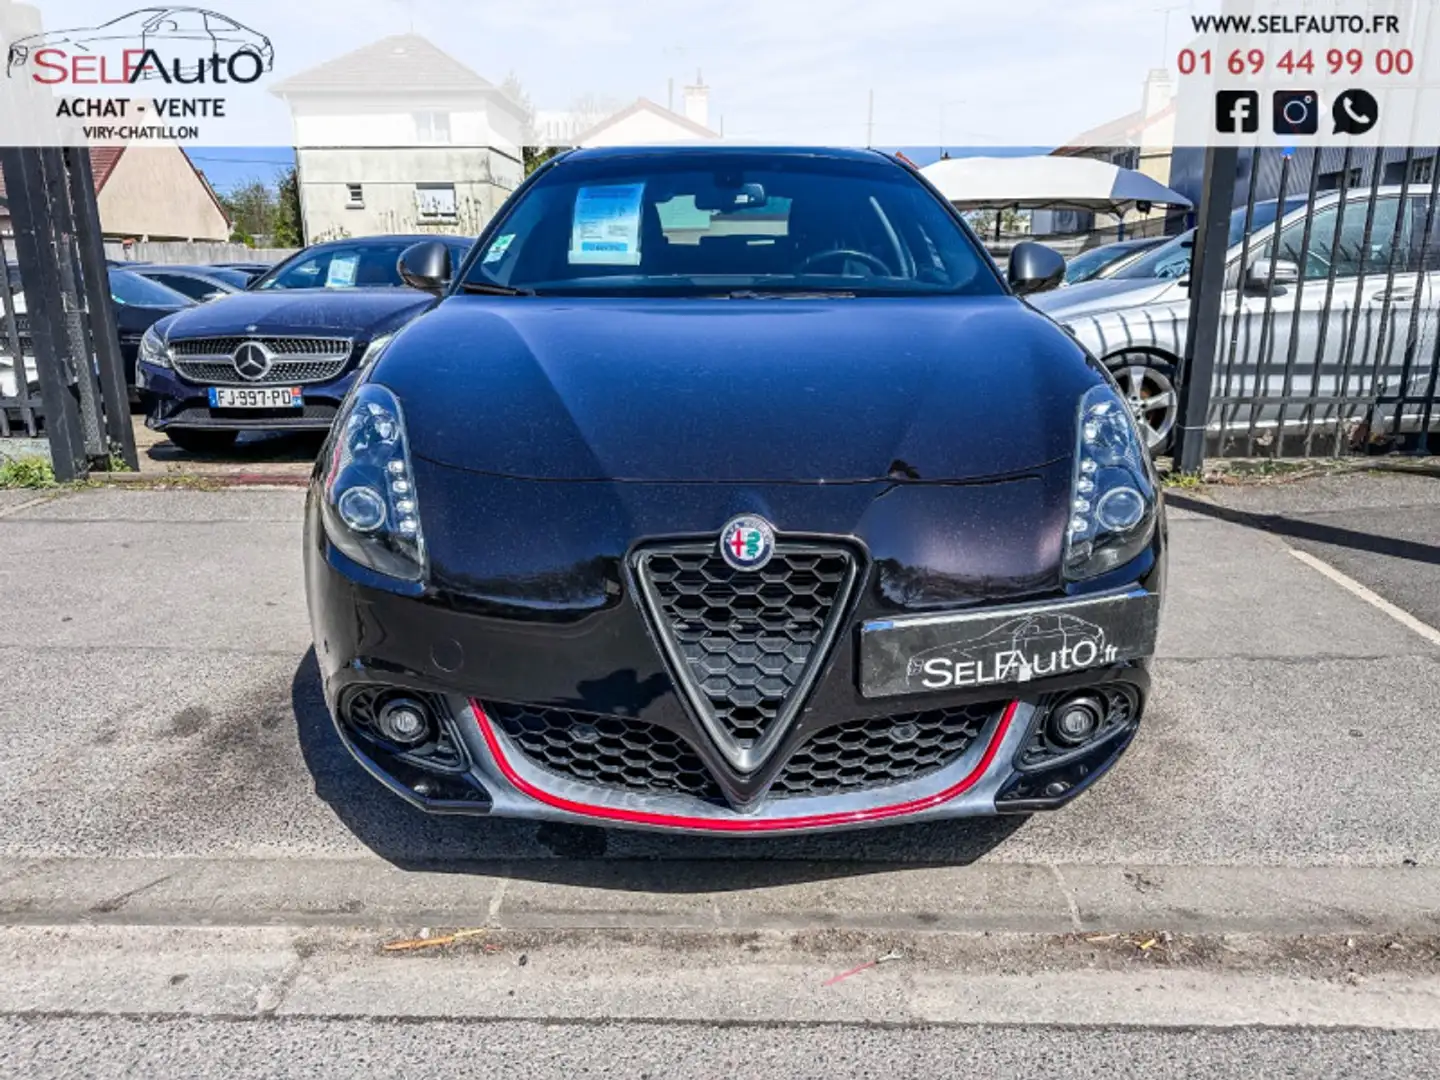 Alfa Romeo Giulietta 1.4 TB MULTIAIR 150CH IMOLA STOP\u0026START - 2